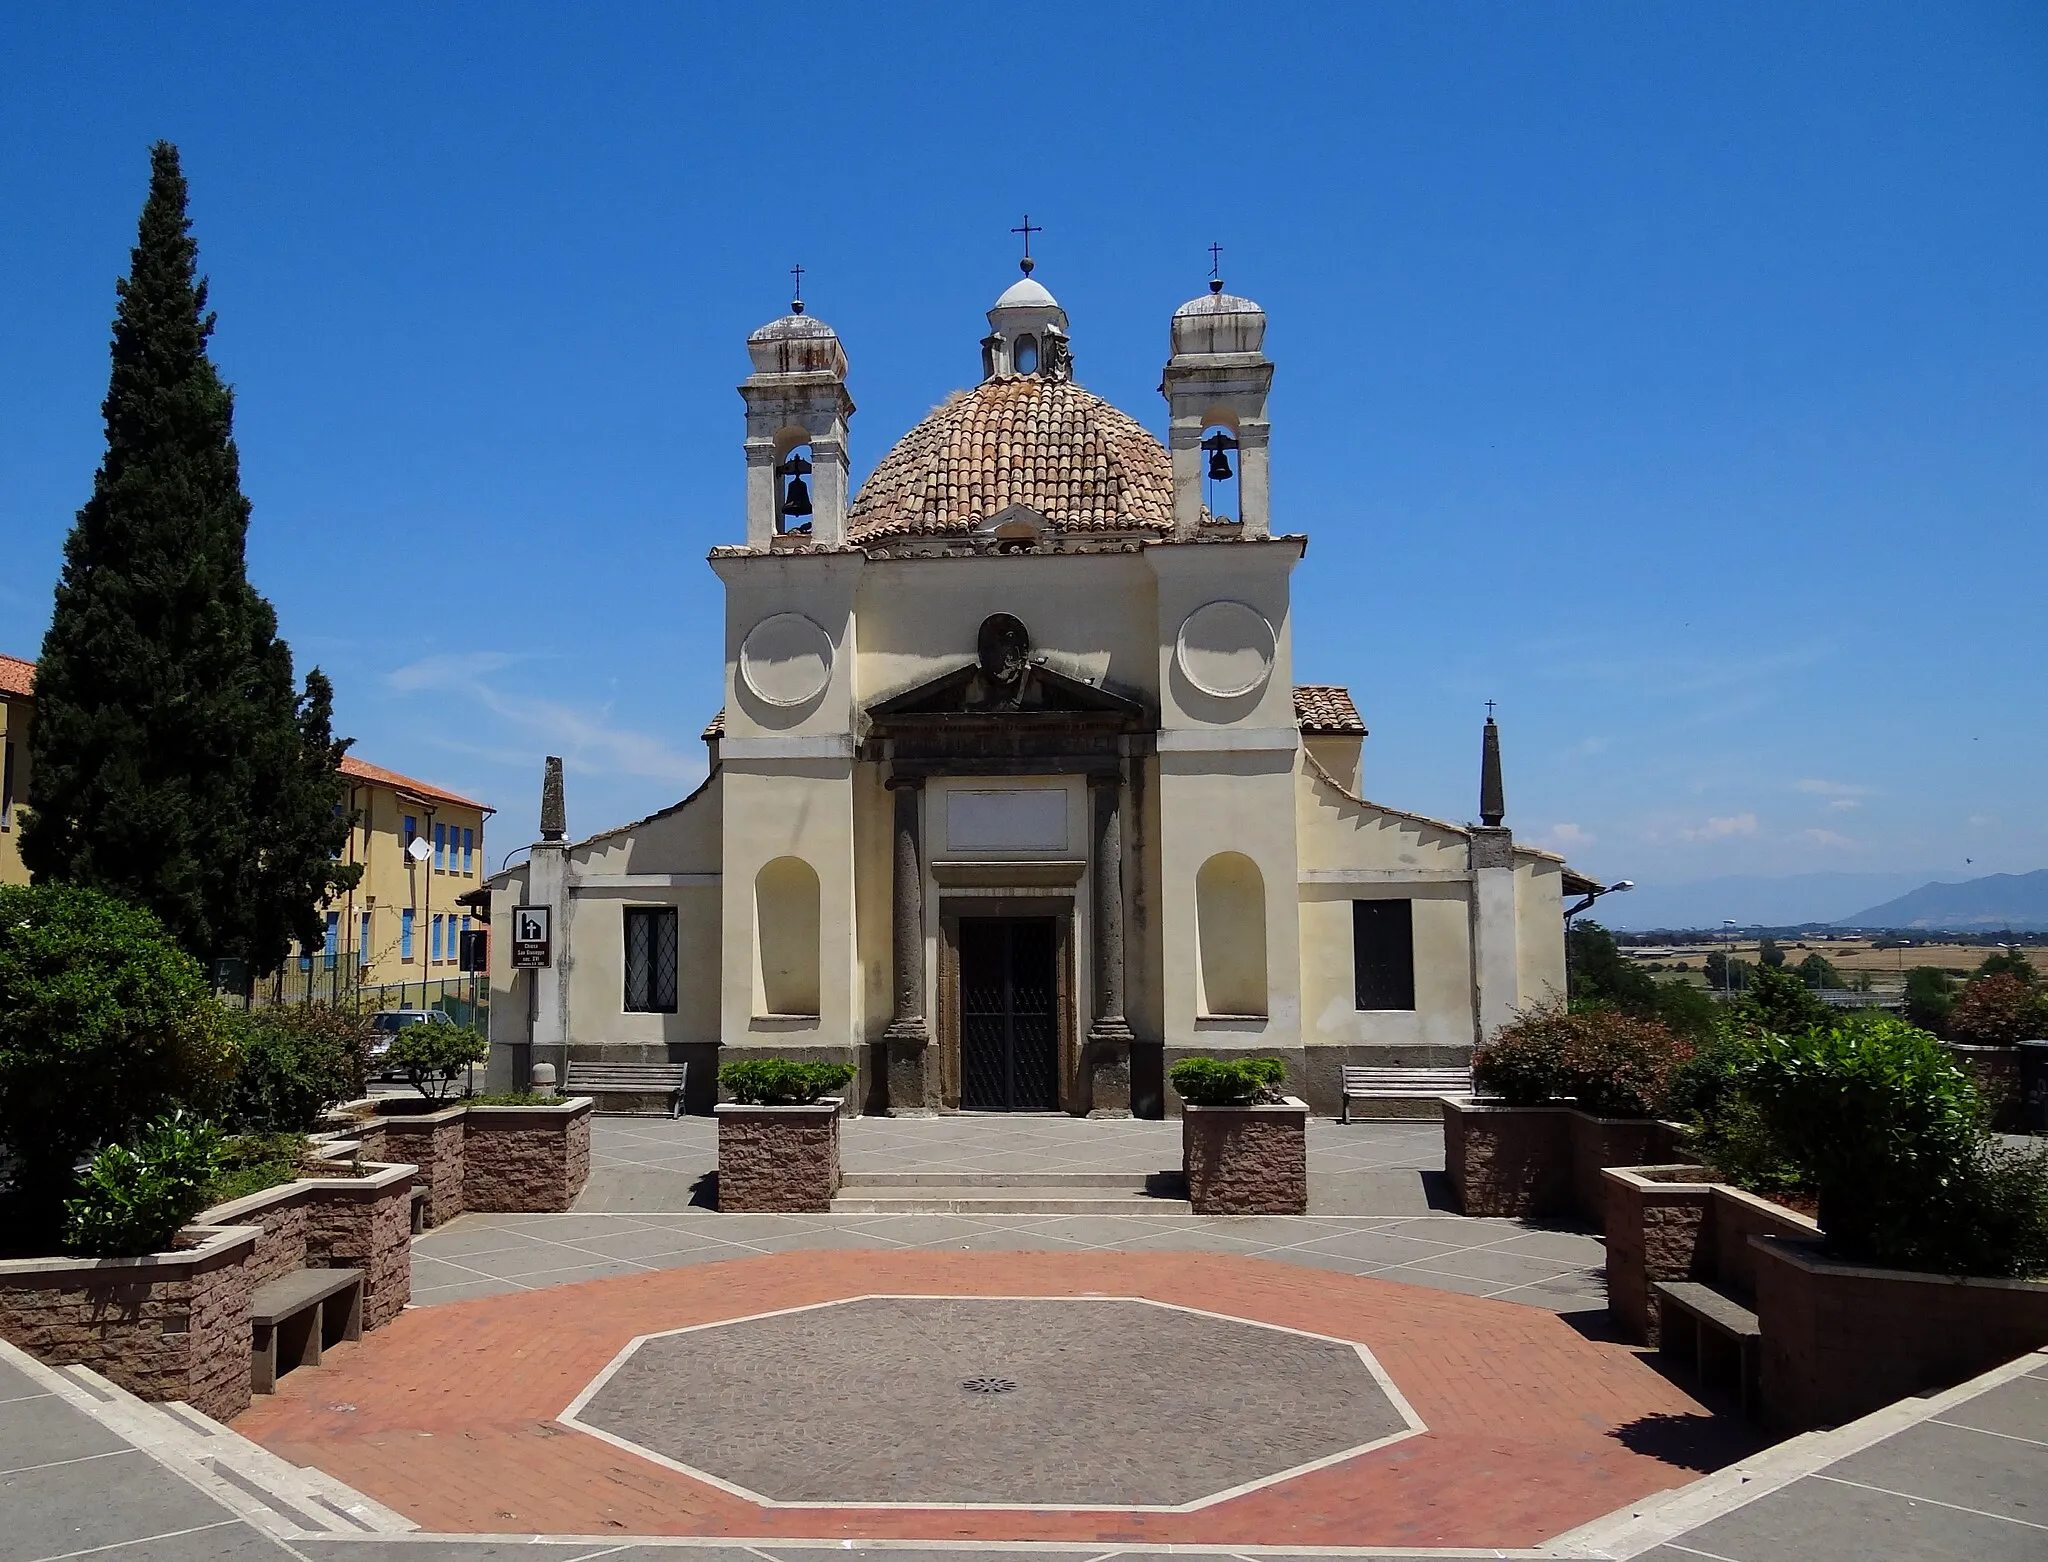 Photo showing: The church Chiesa San Giuseppe in Monterosi, Lazio, Italy.